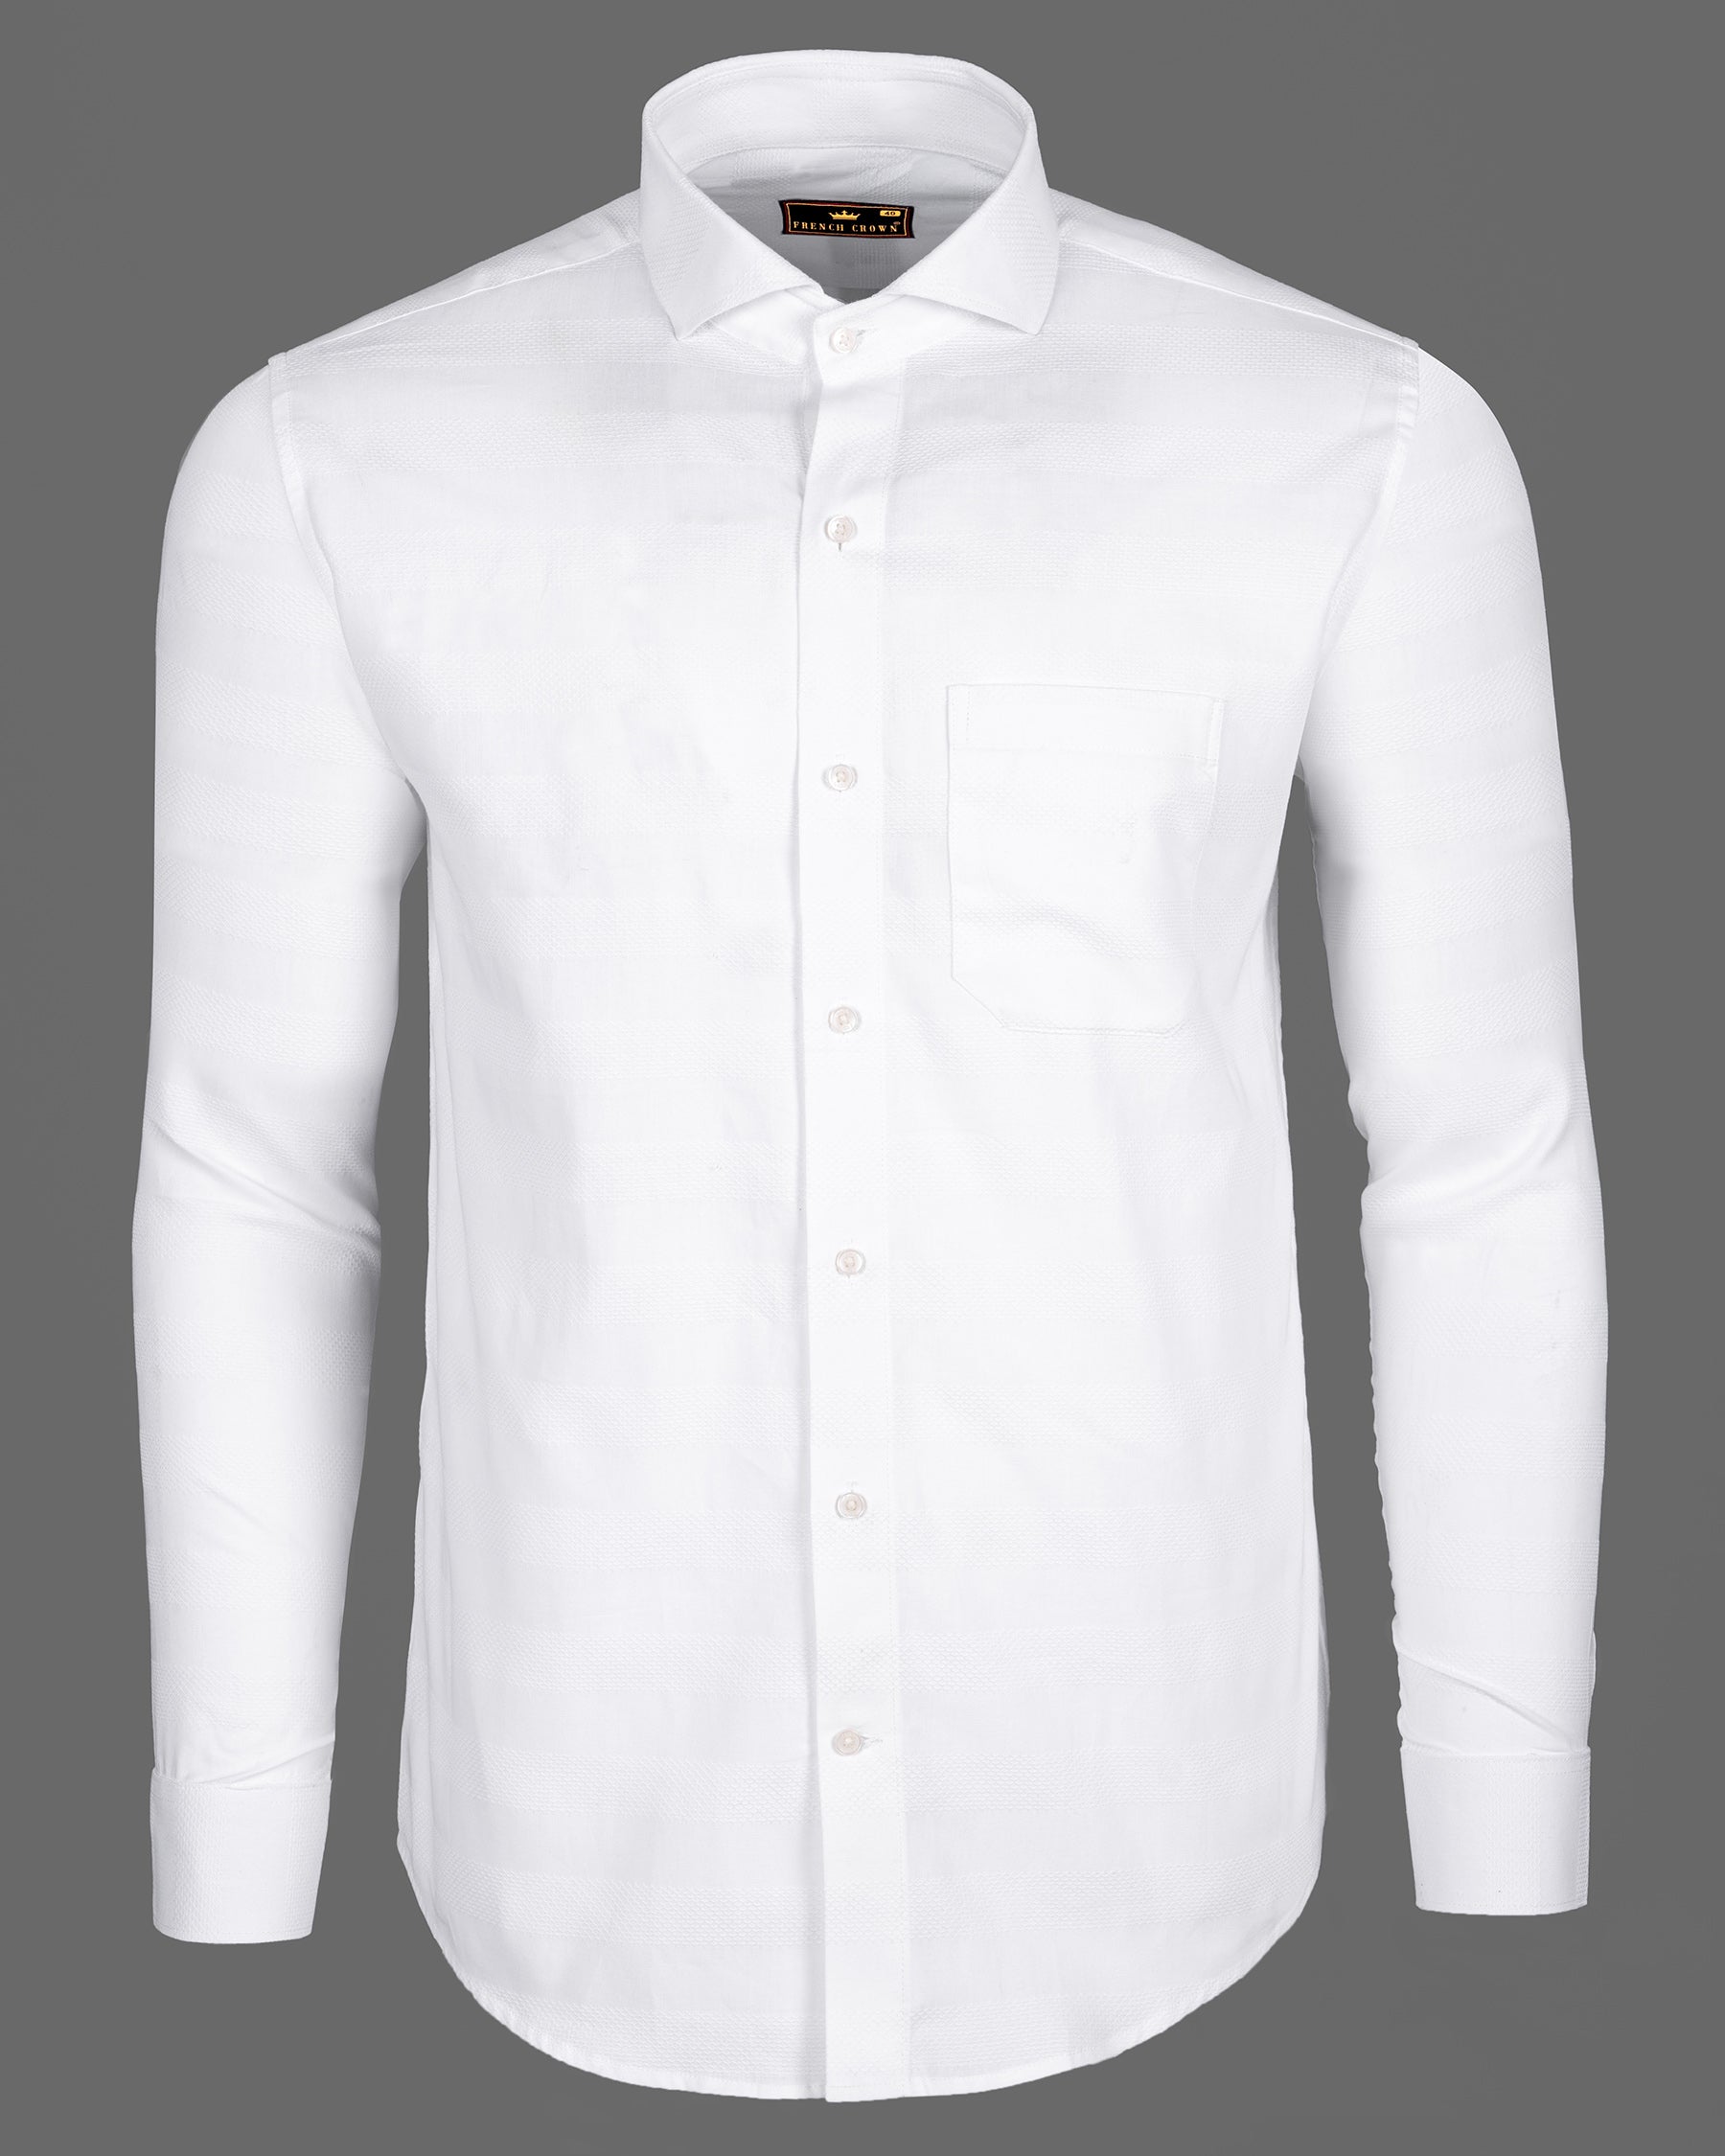 Bright white dobby striped Premium Cotton shirt 4980-CA-38,4980-CA-H-38,4980-CA-39,4980-CA-H-39,4980-CA-40,4980-CA-H-40,4980-CA-42,4980-CA-H-42,4980-CA-44,4980-CA-H-44,4980-CA-46,4980-CA-H-46,4980-CA-48,4980-CA-H-48,4980-CA-50,4980-CA-H-50,4980-CA-52,4980-CA-H-52